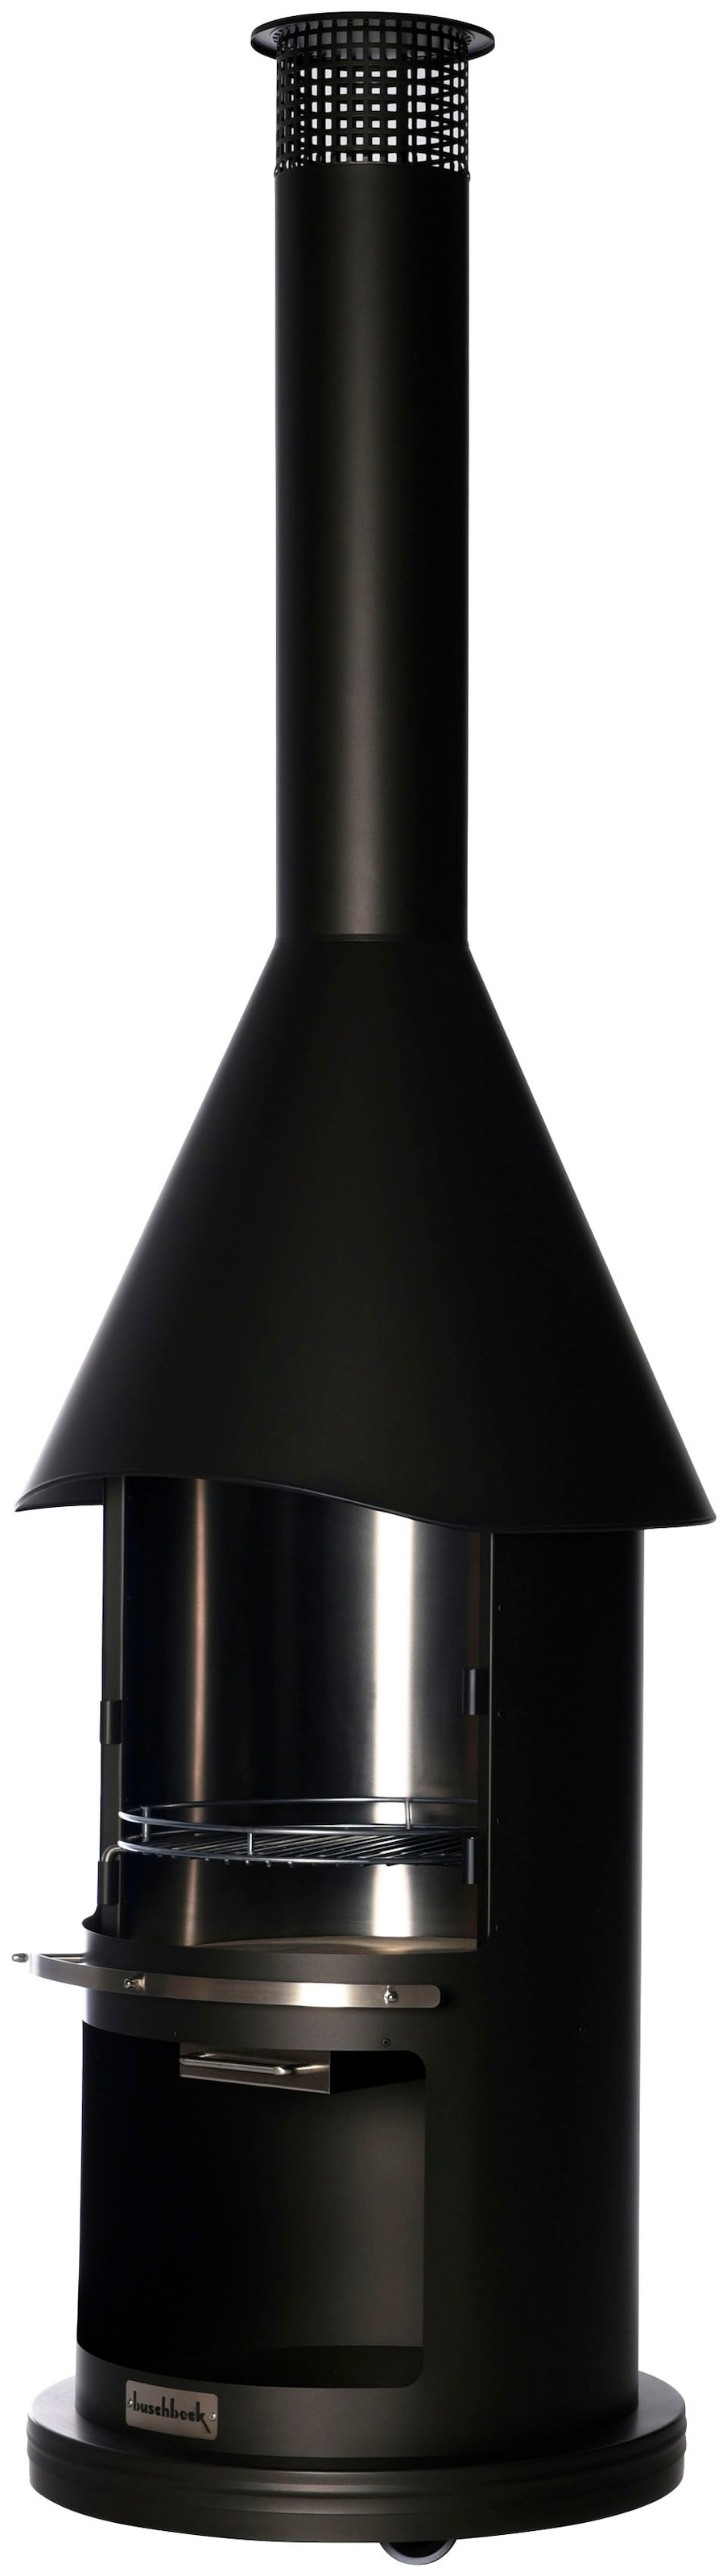 Buschbeck Holzkohlegrill "Edelstahlgrill Auckland, schwarz", Edles Design, Premium-Produkt mit Senotherm-Lackierung, Ø65